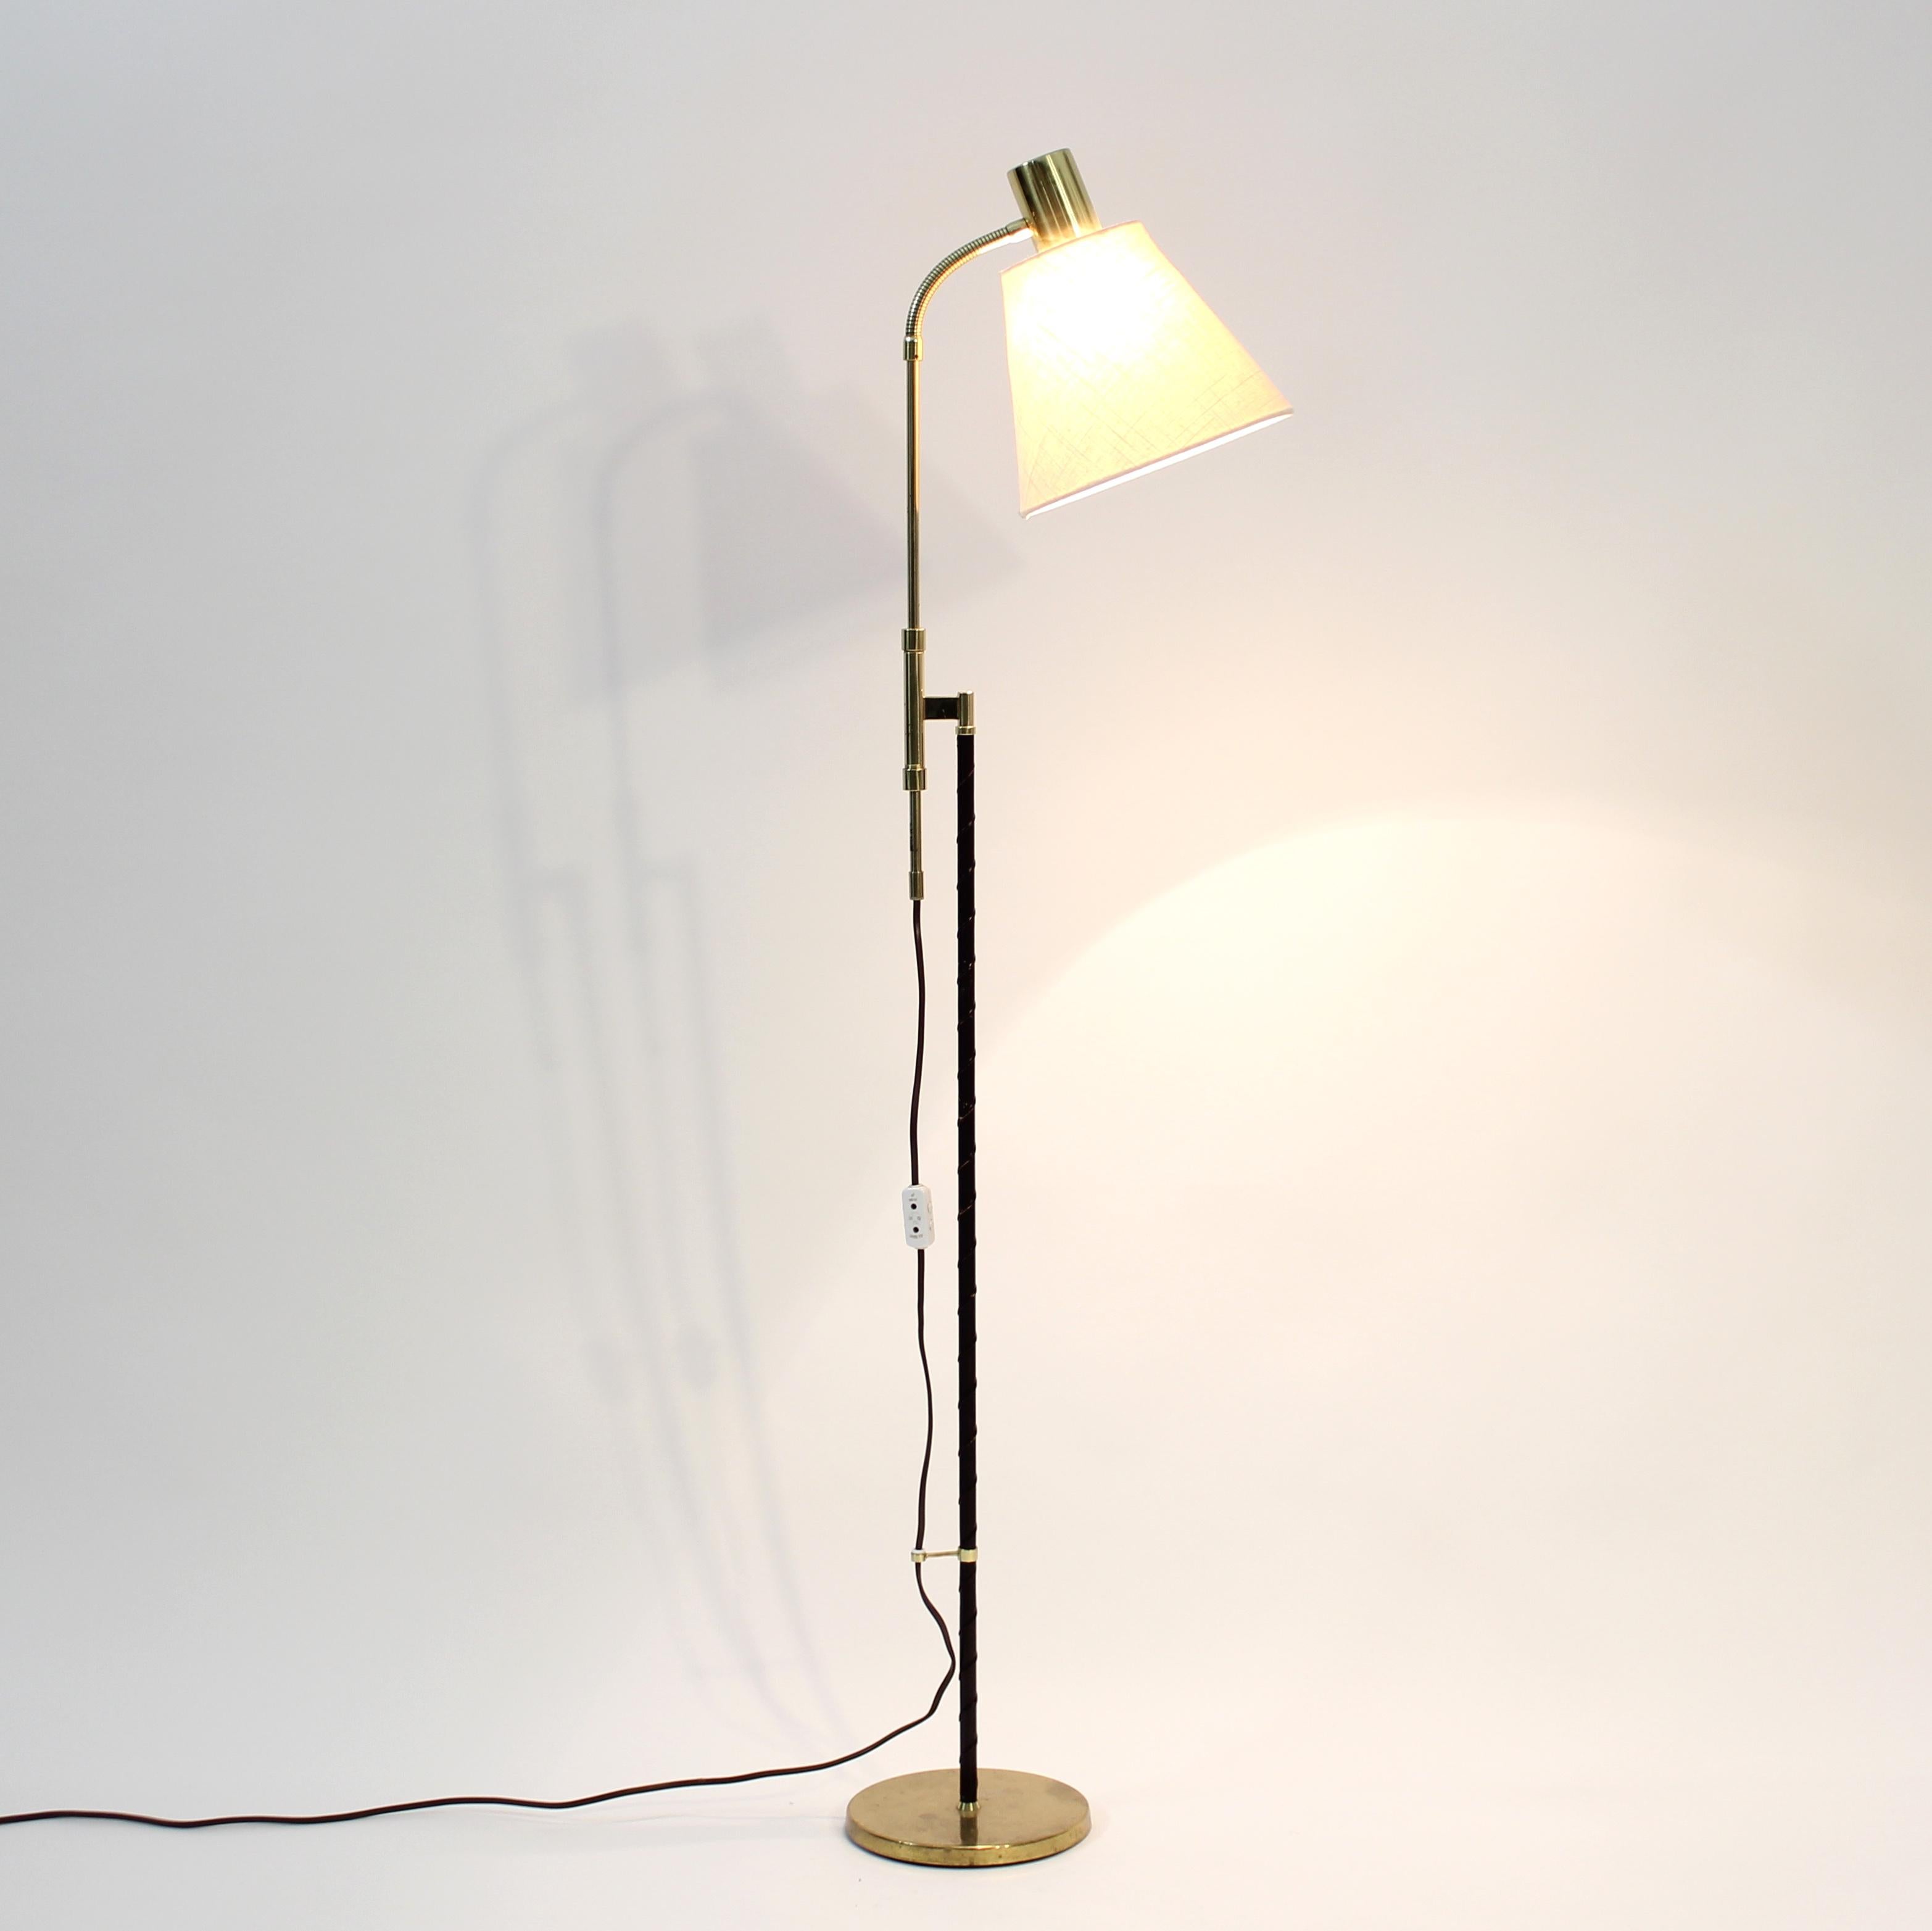 Brass Swedish height adjustable floor lamp by MAE (Möller Armatur Eskilstuna), 1960s For Sale